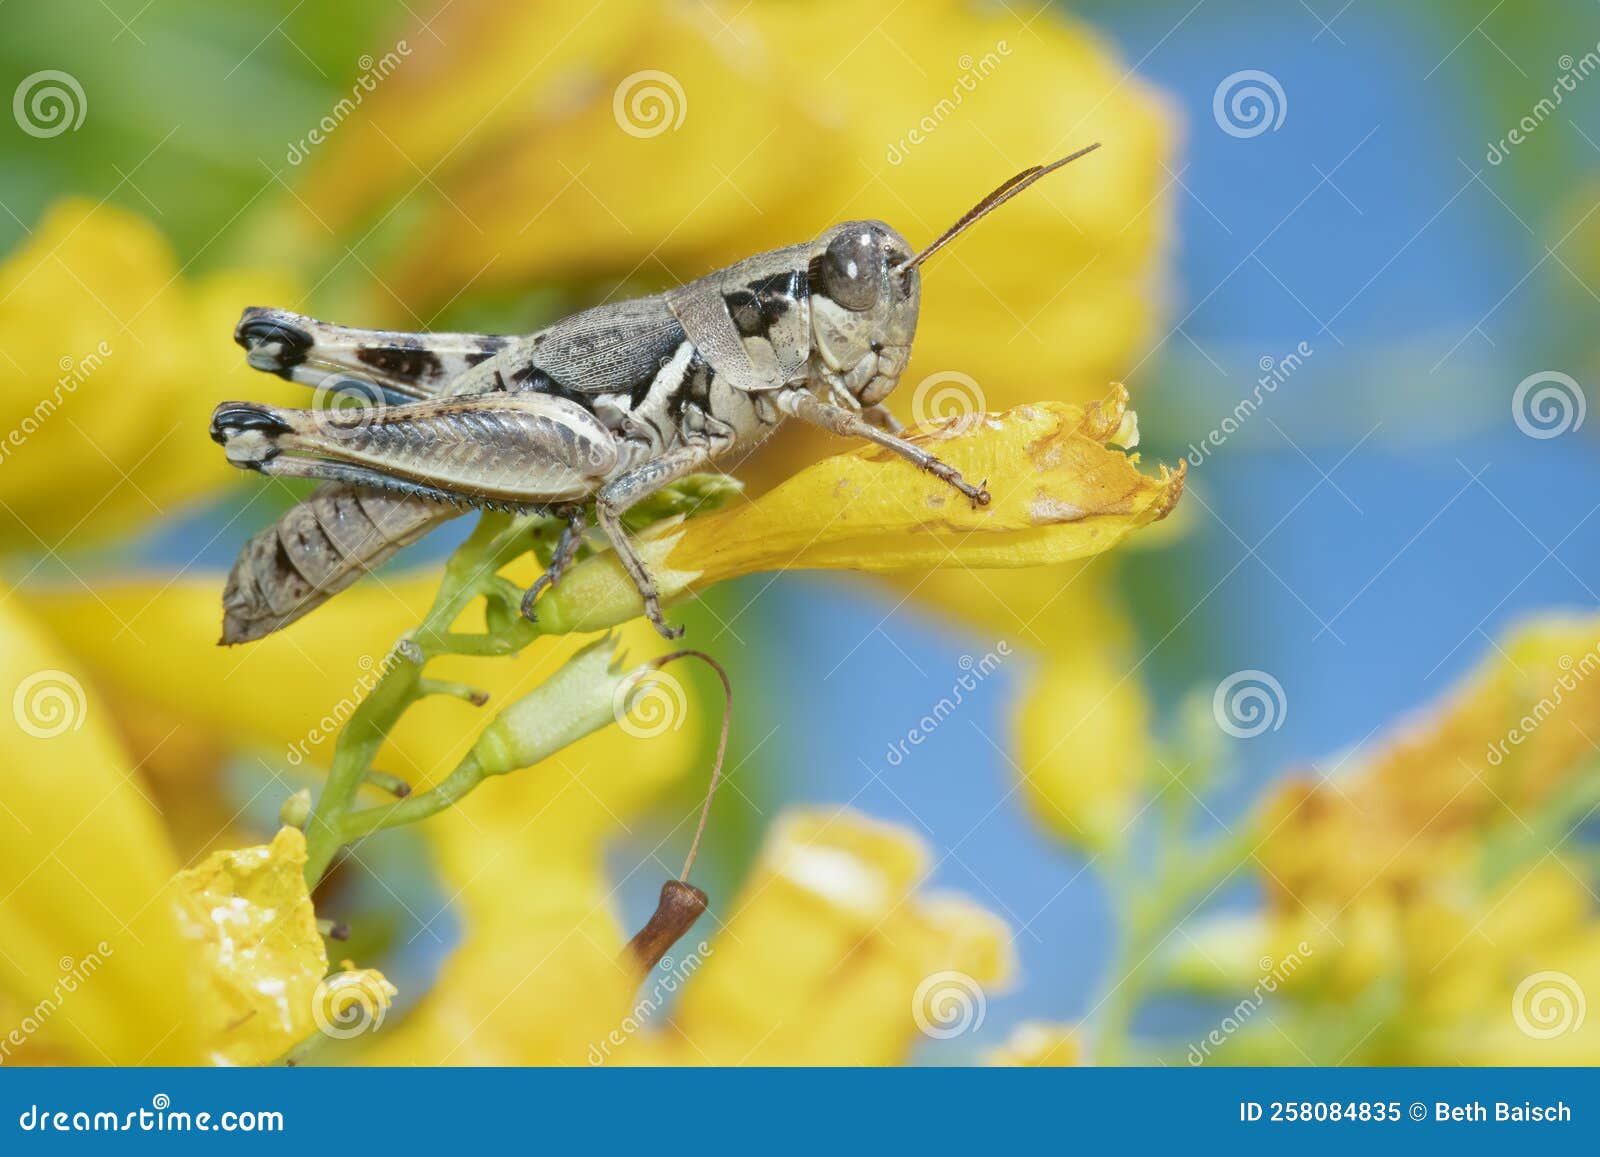 lakin grasshopper feeding on flowering esperanza